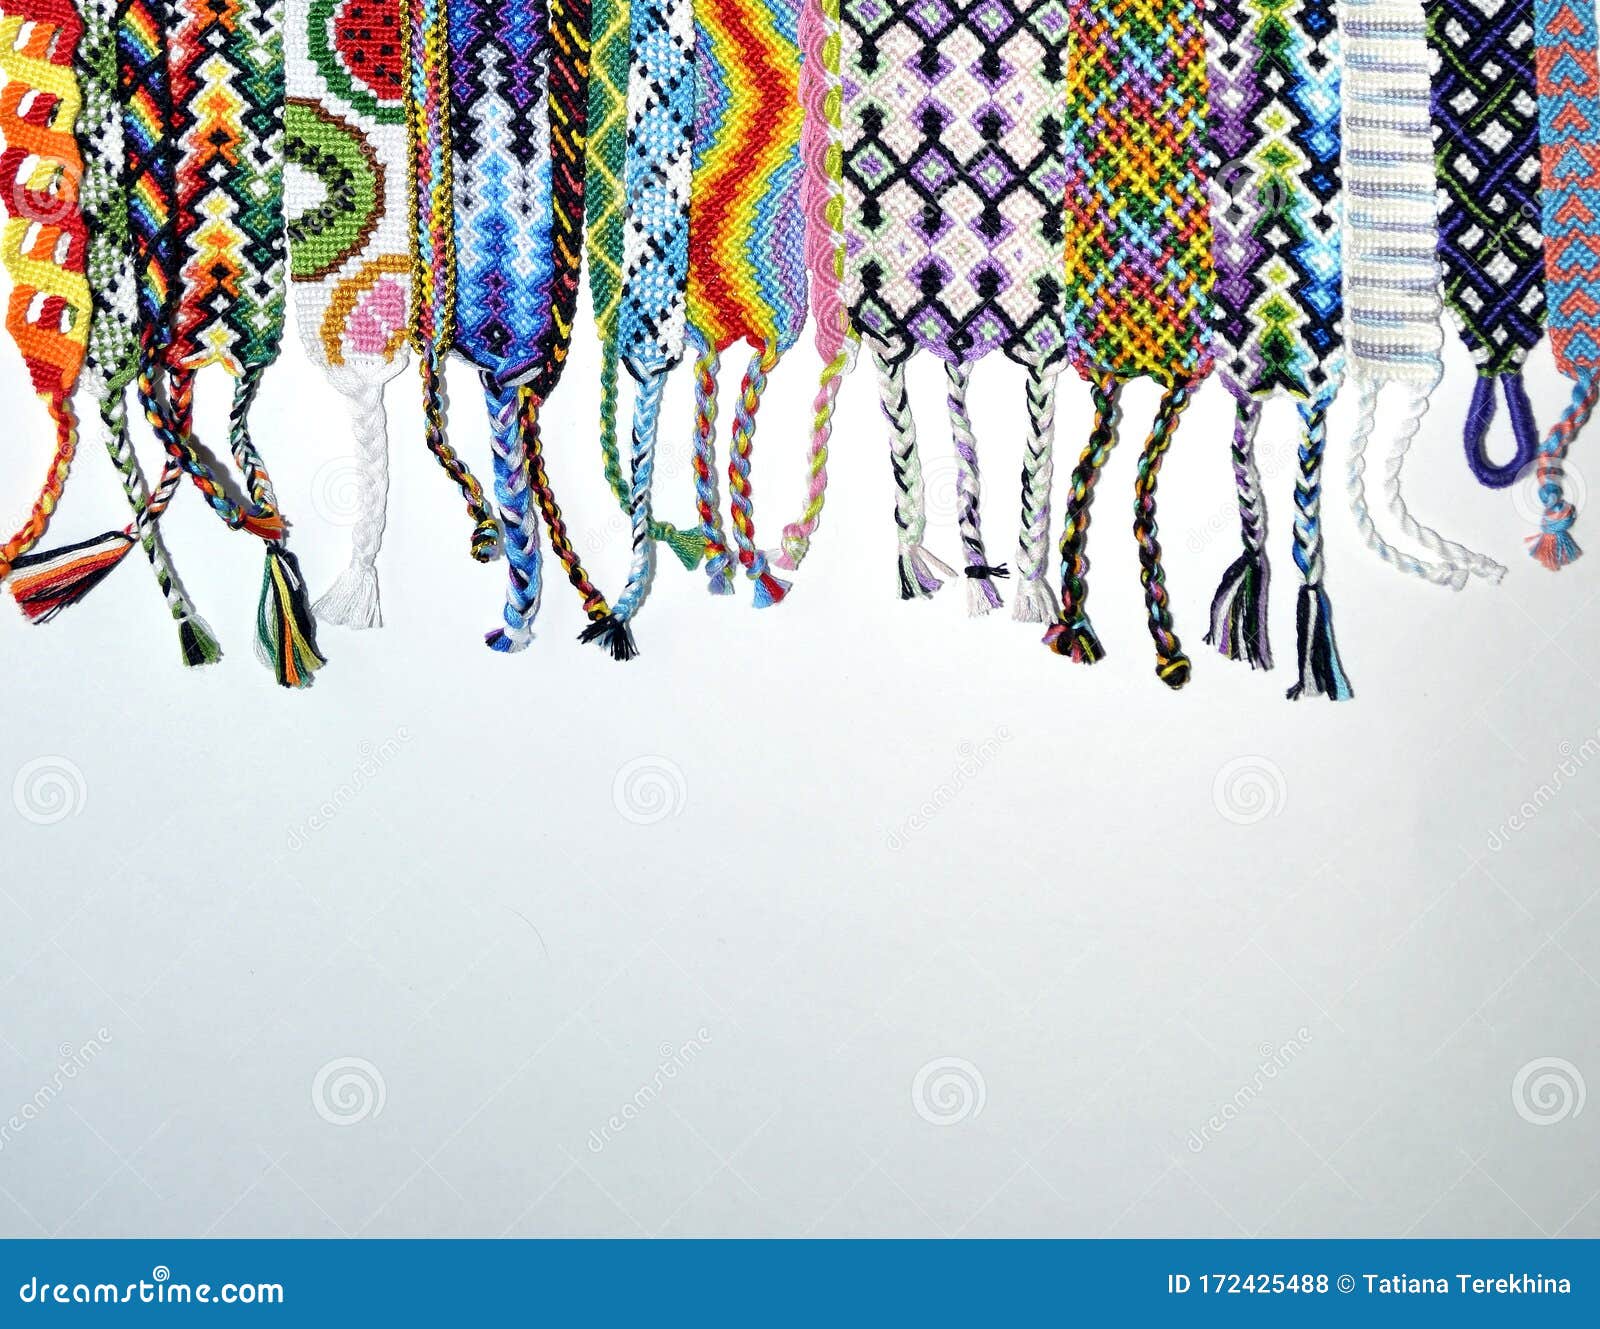 Custom Name Friendship Bracelet Embroidery Floss Cotton Thread (ONE bracelet)  | eBay